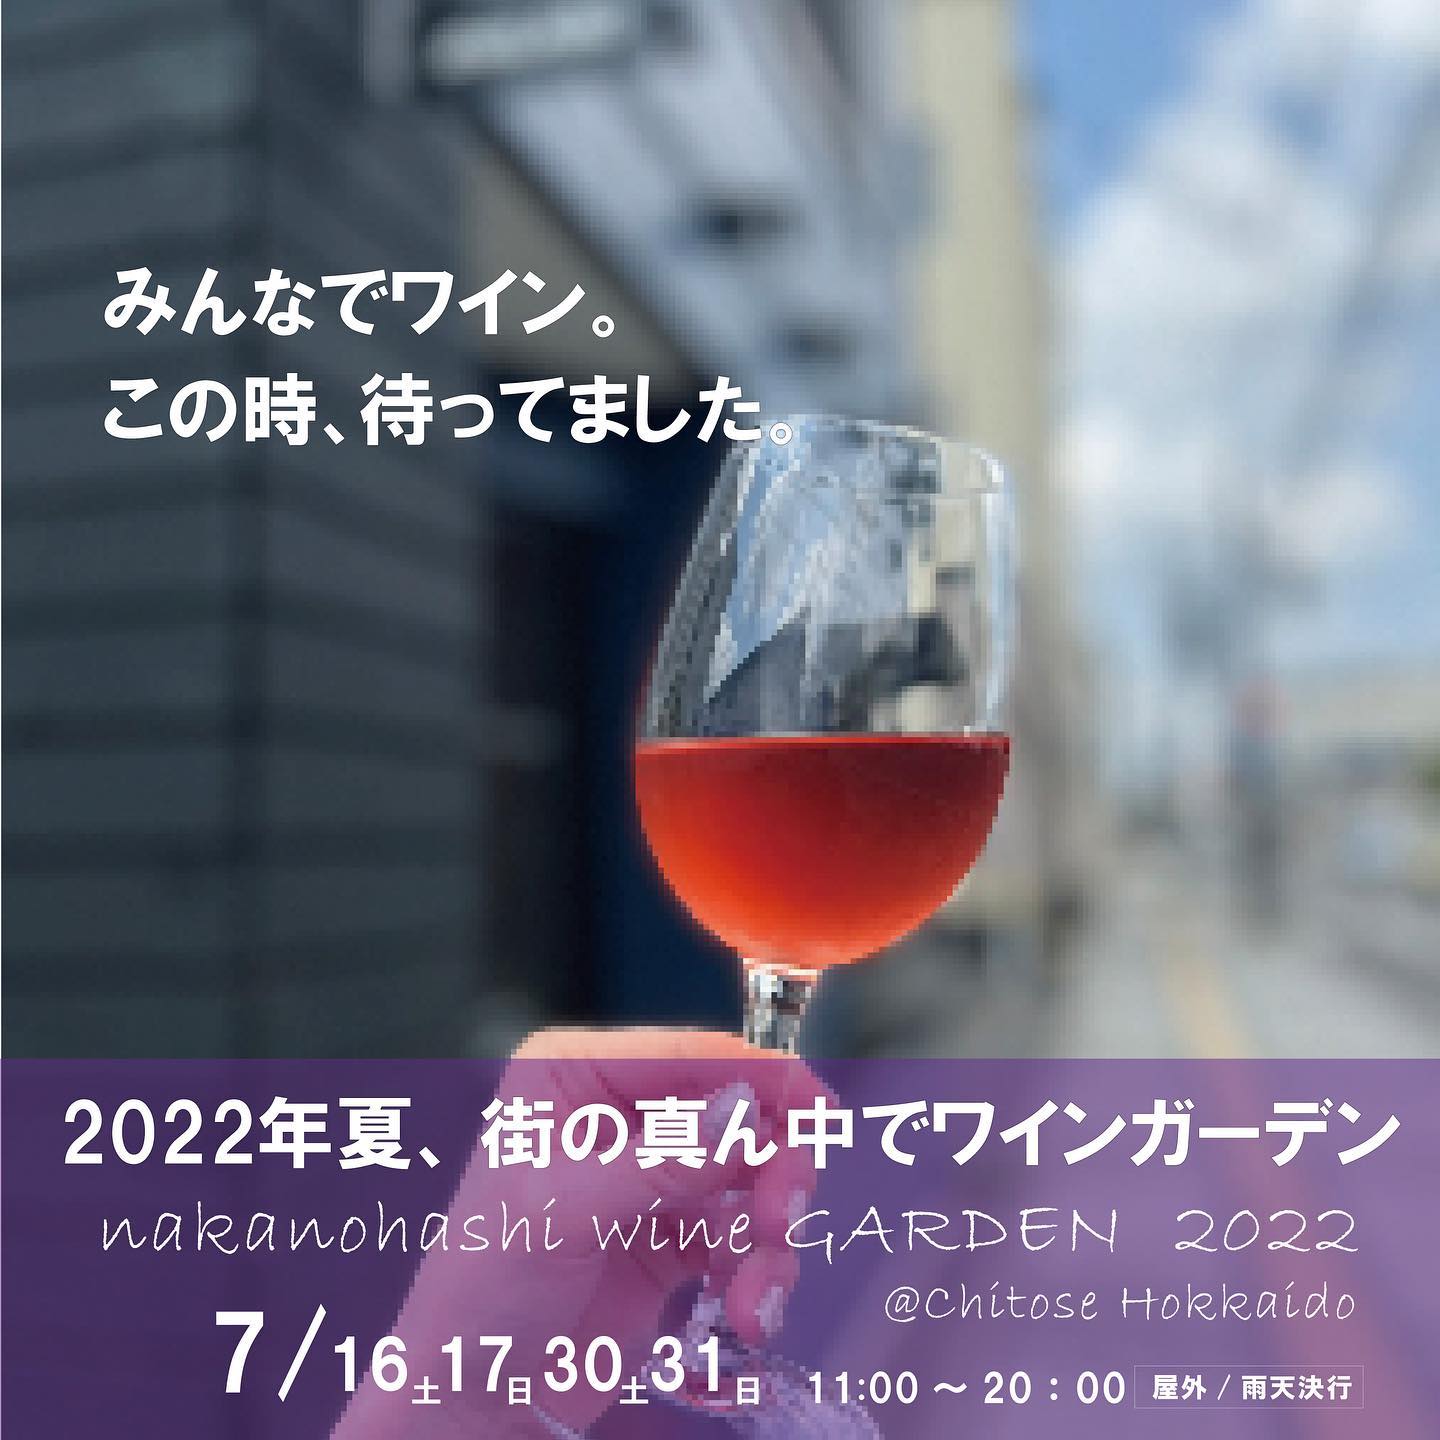 nakanohashi wine port